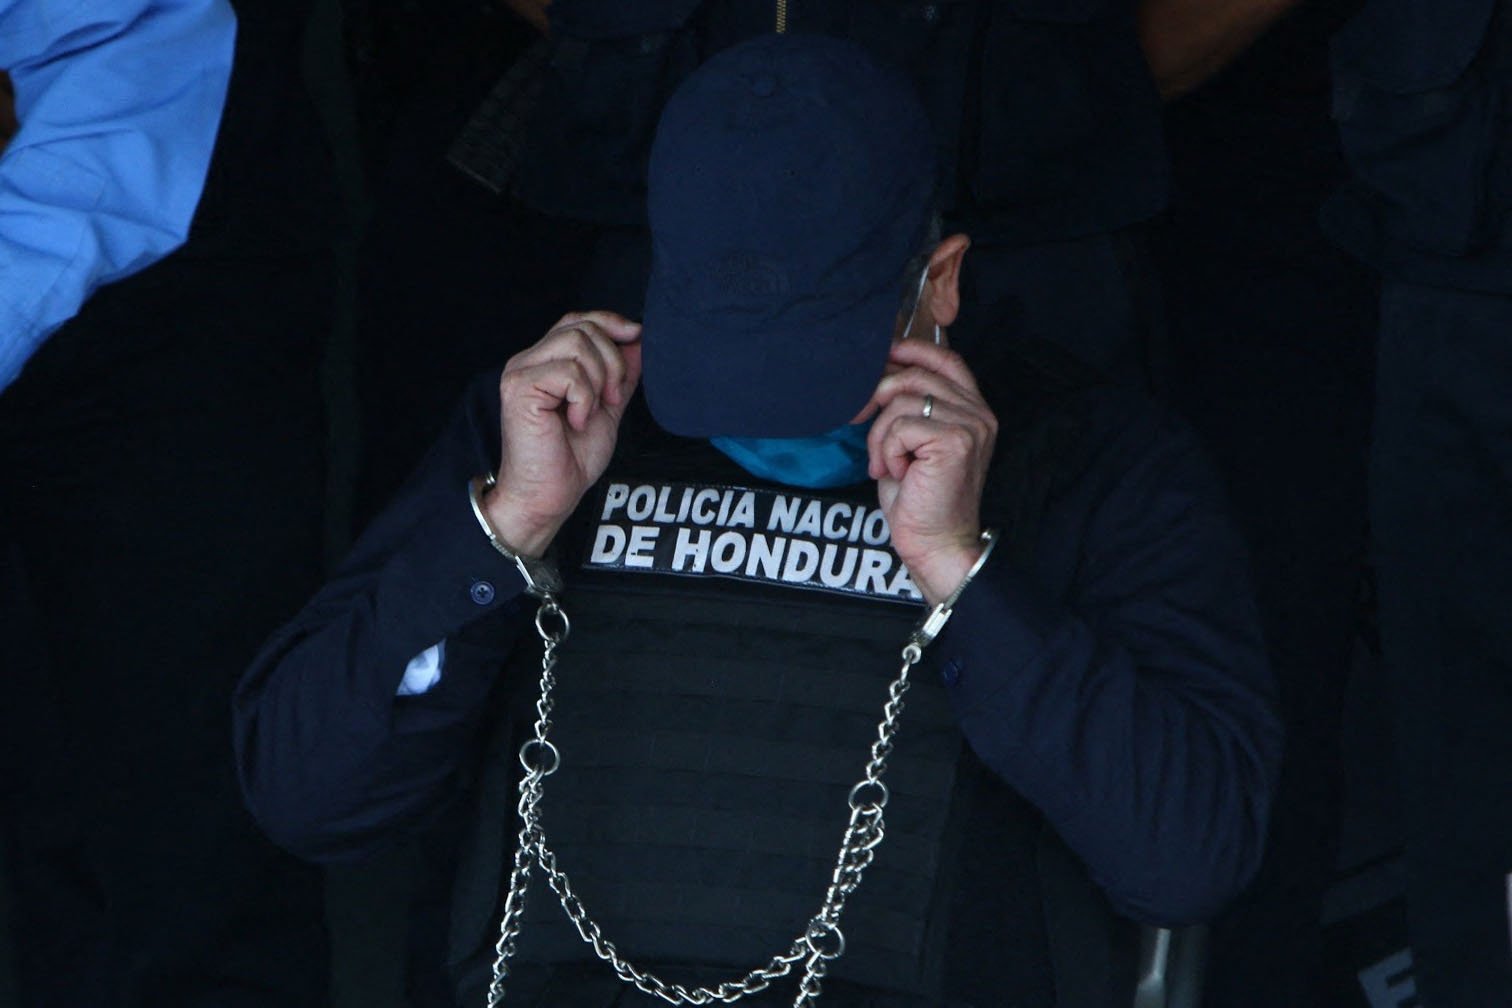 Honduran former President Juan Orlando Hernandez is seen handcuffed at police headquarters in Tegucigalpa, Honduras, Feb. 15, 2022. (AFP Photo)